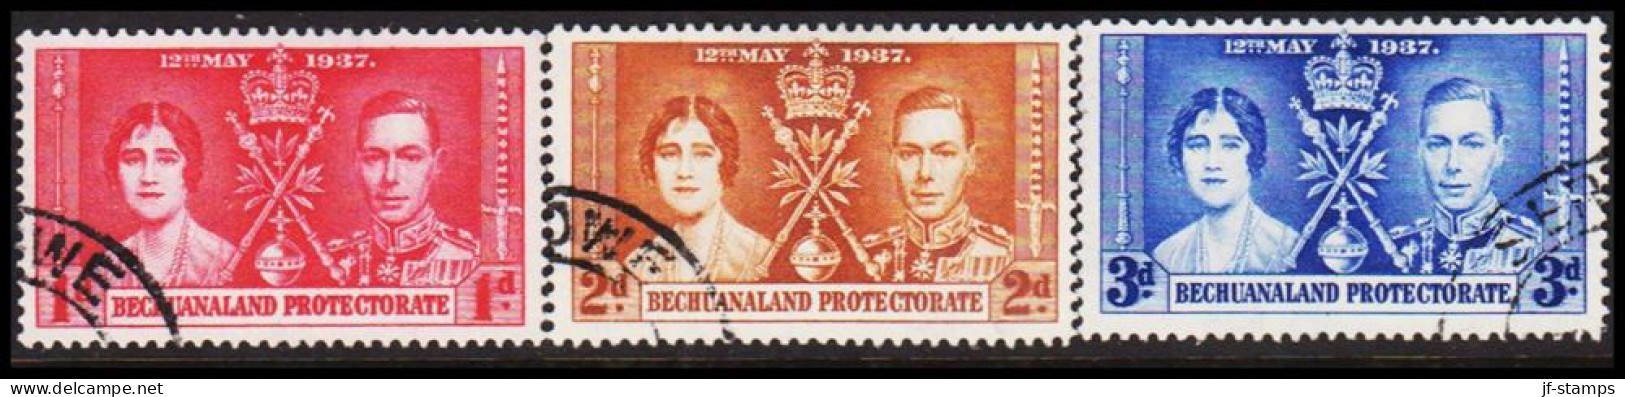 1937. BECHUANALAND. Georg VI Coronation Complete Set.  (MICHEL 98-100) - JF537436 - 1885-1964 Bechuanaland Protettorato